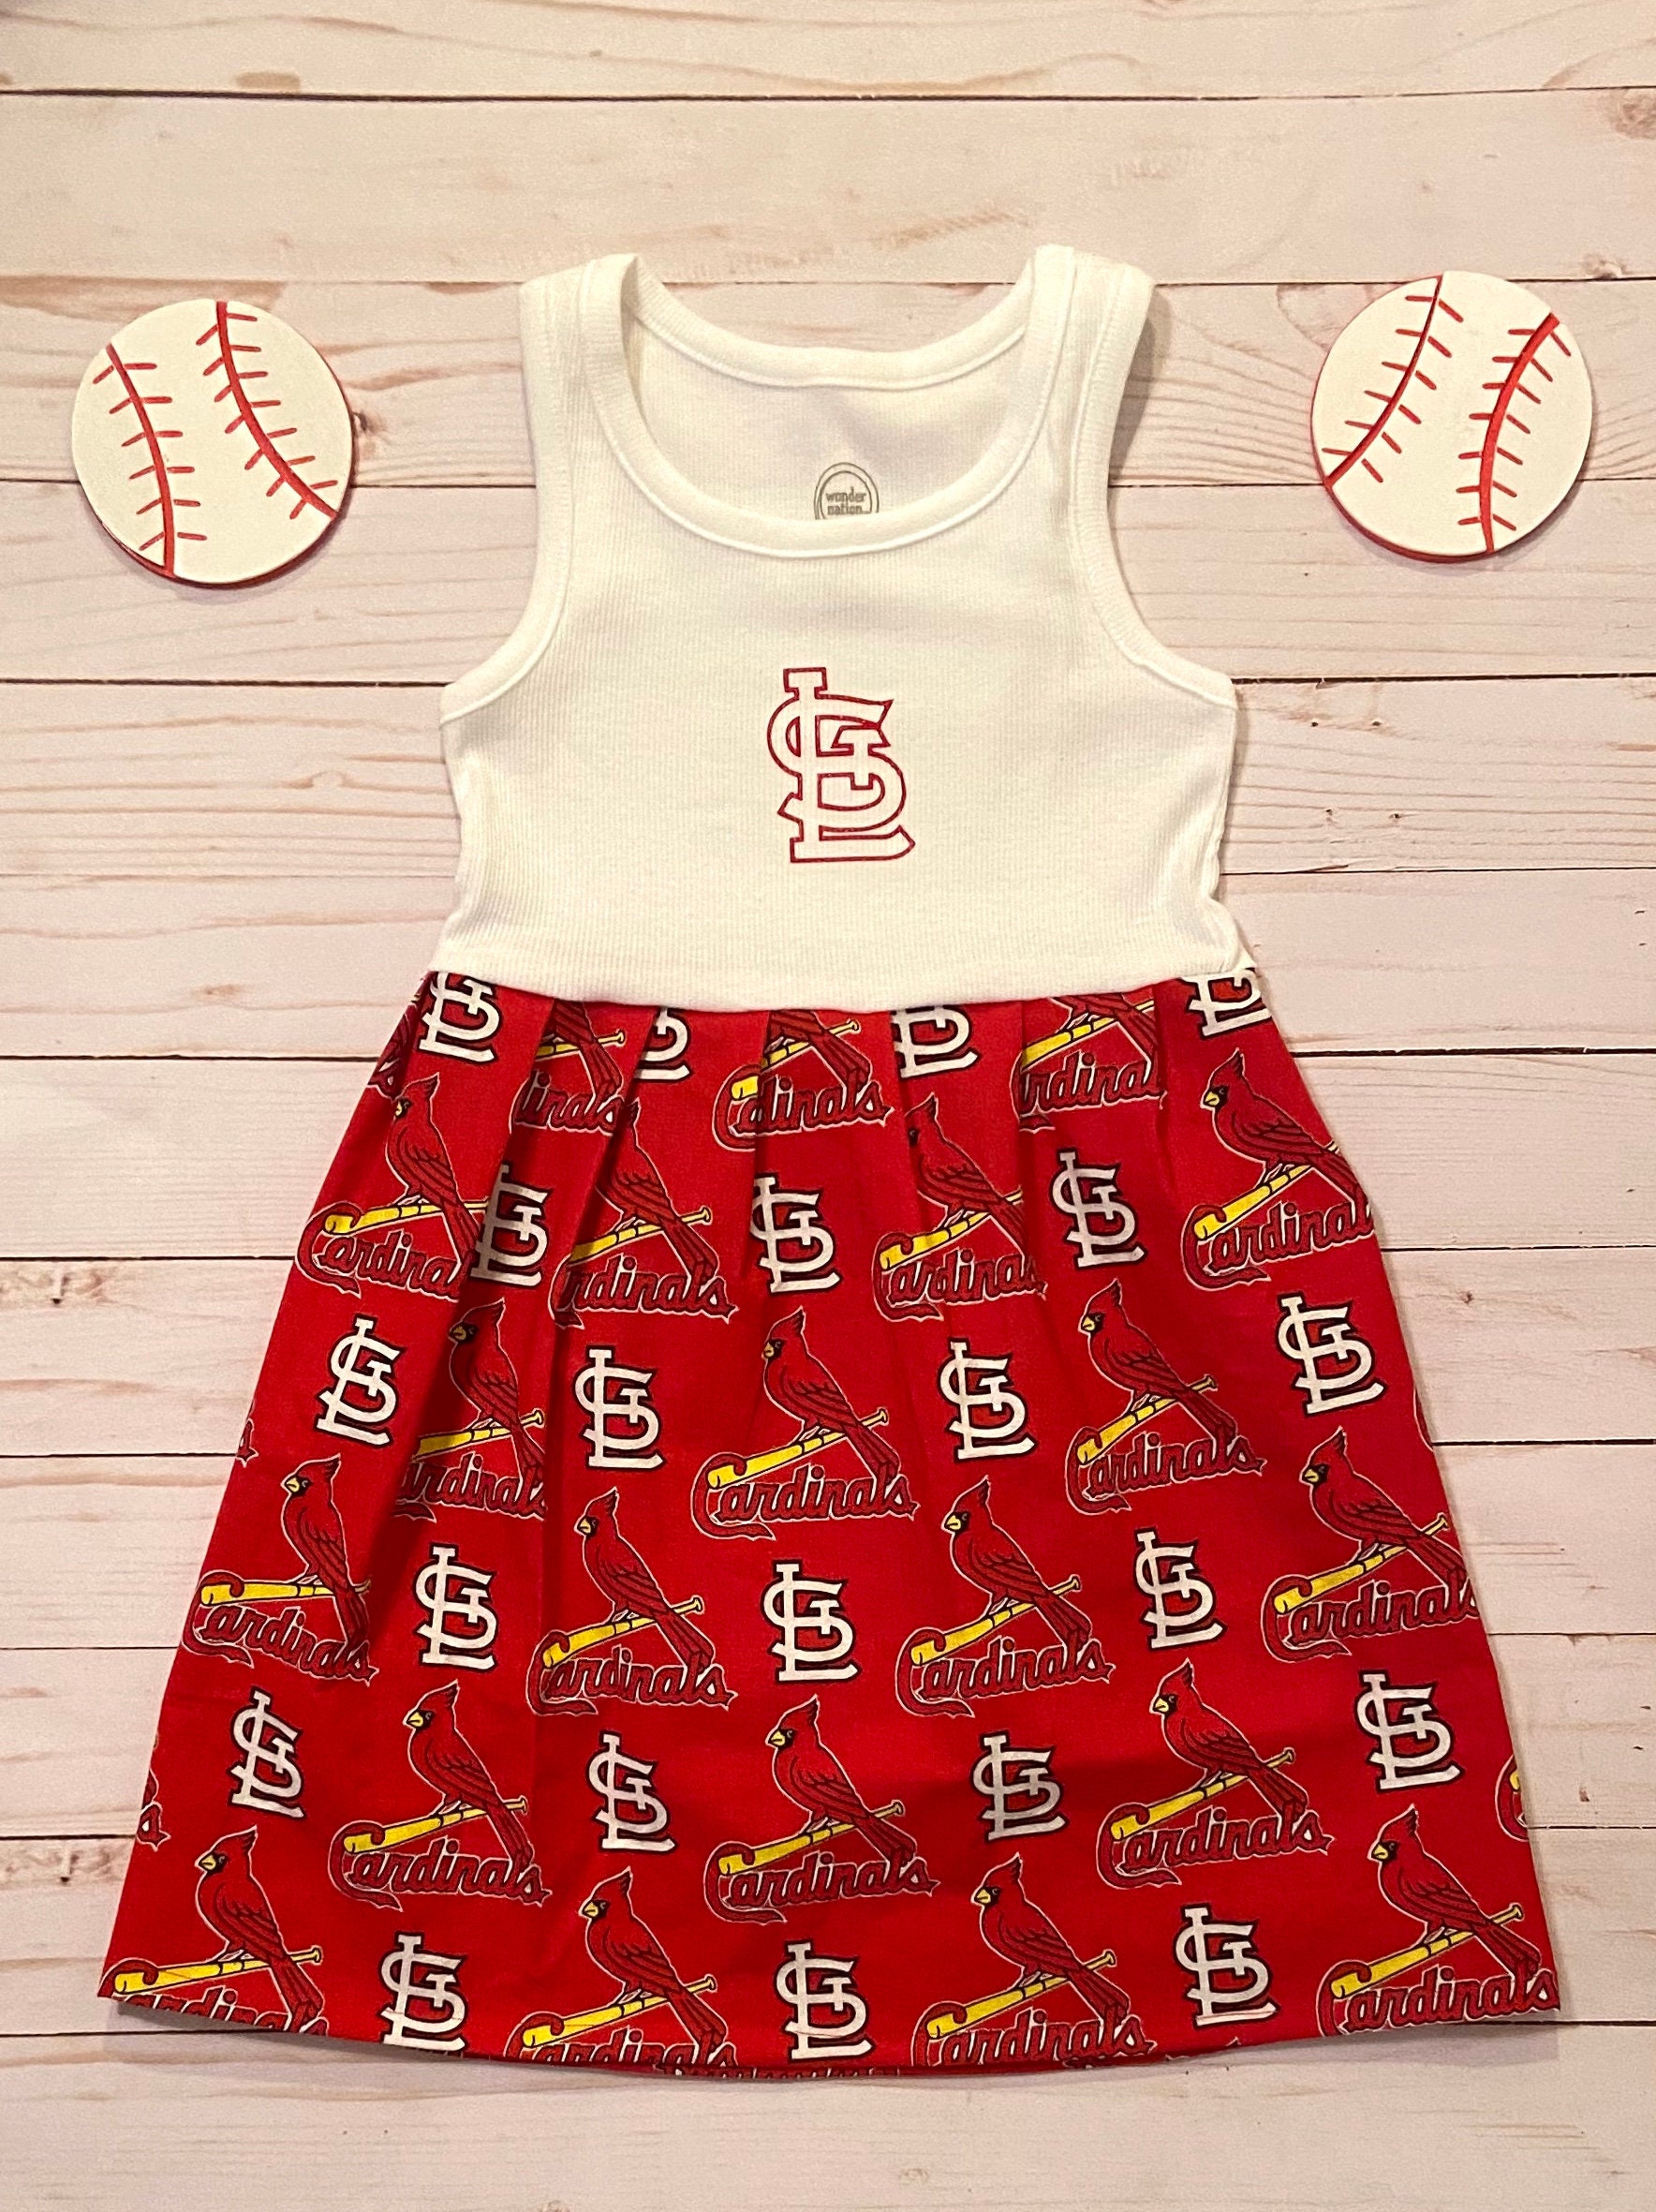 Stl cardinals toddler/baby clothes Cardinals baby gift st Louis baseball  baby